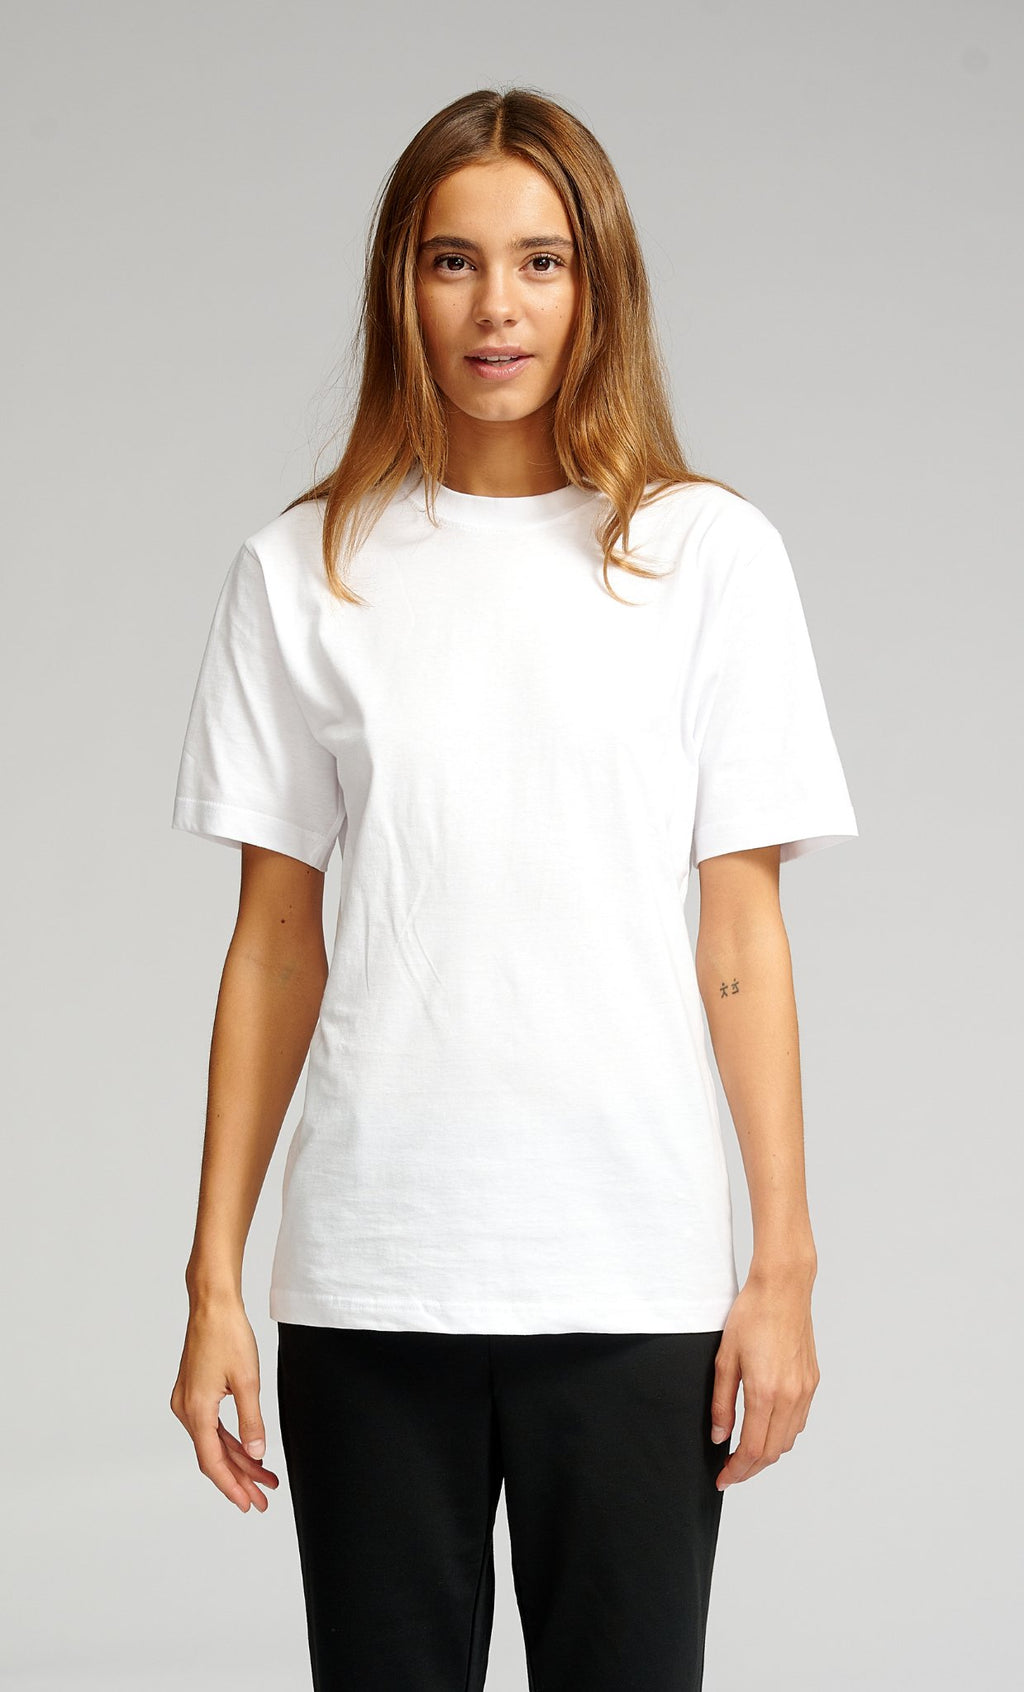 T -shirt oversize - bianco